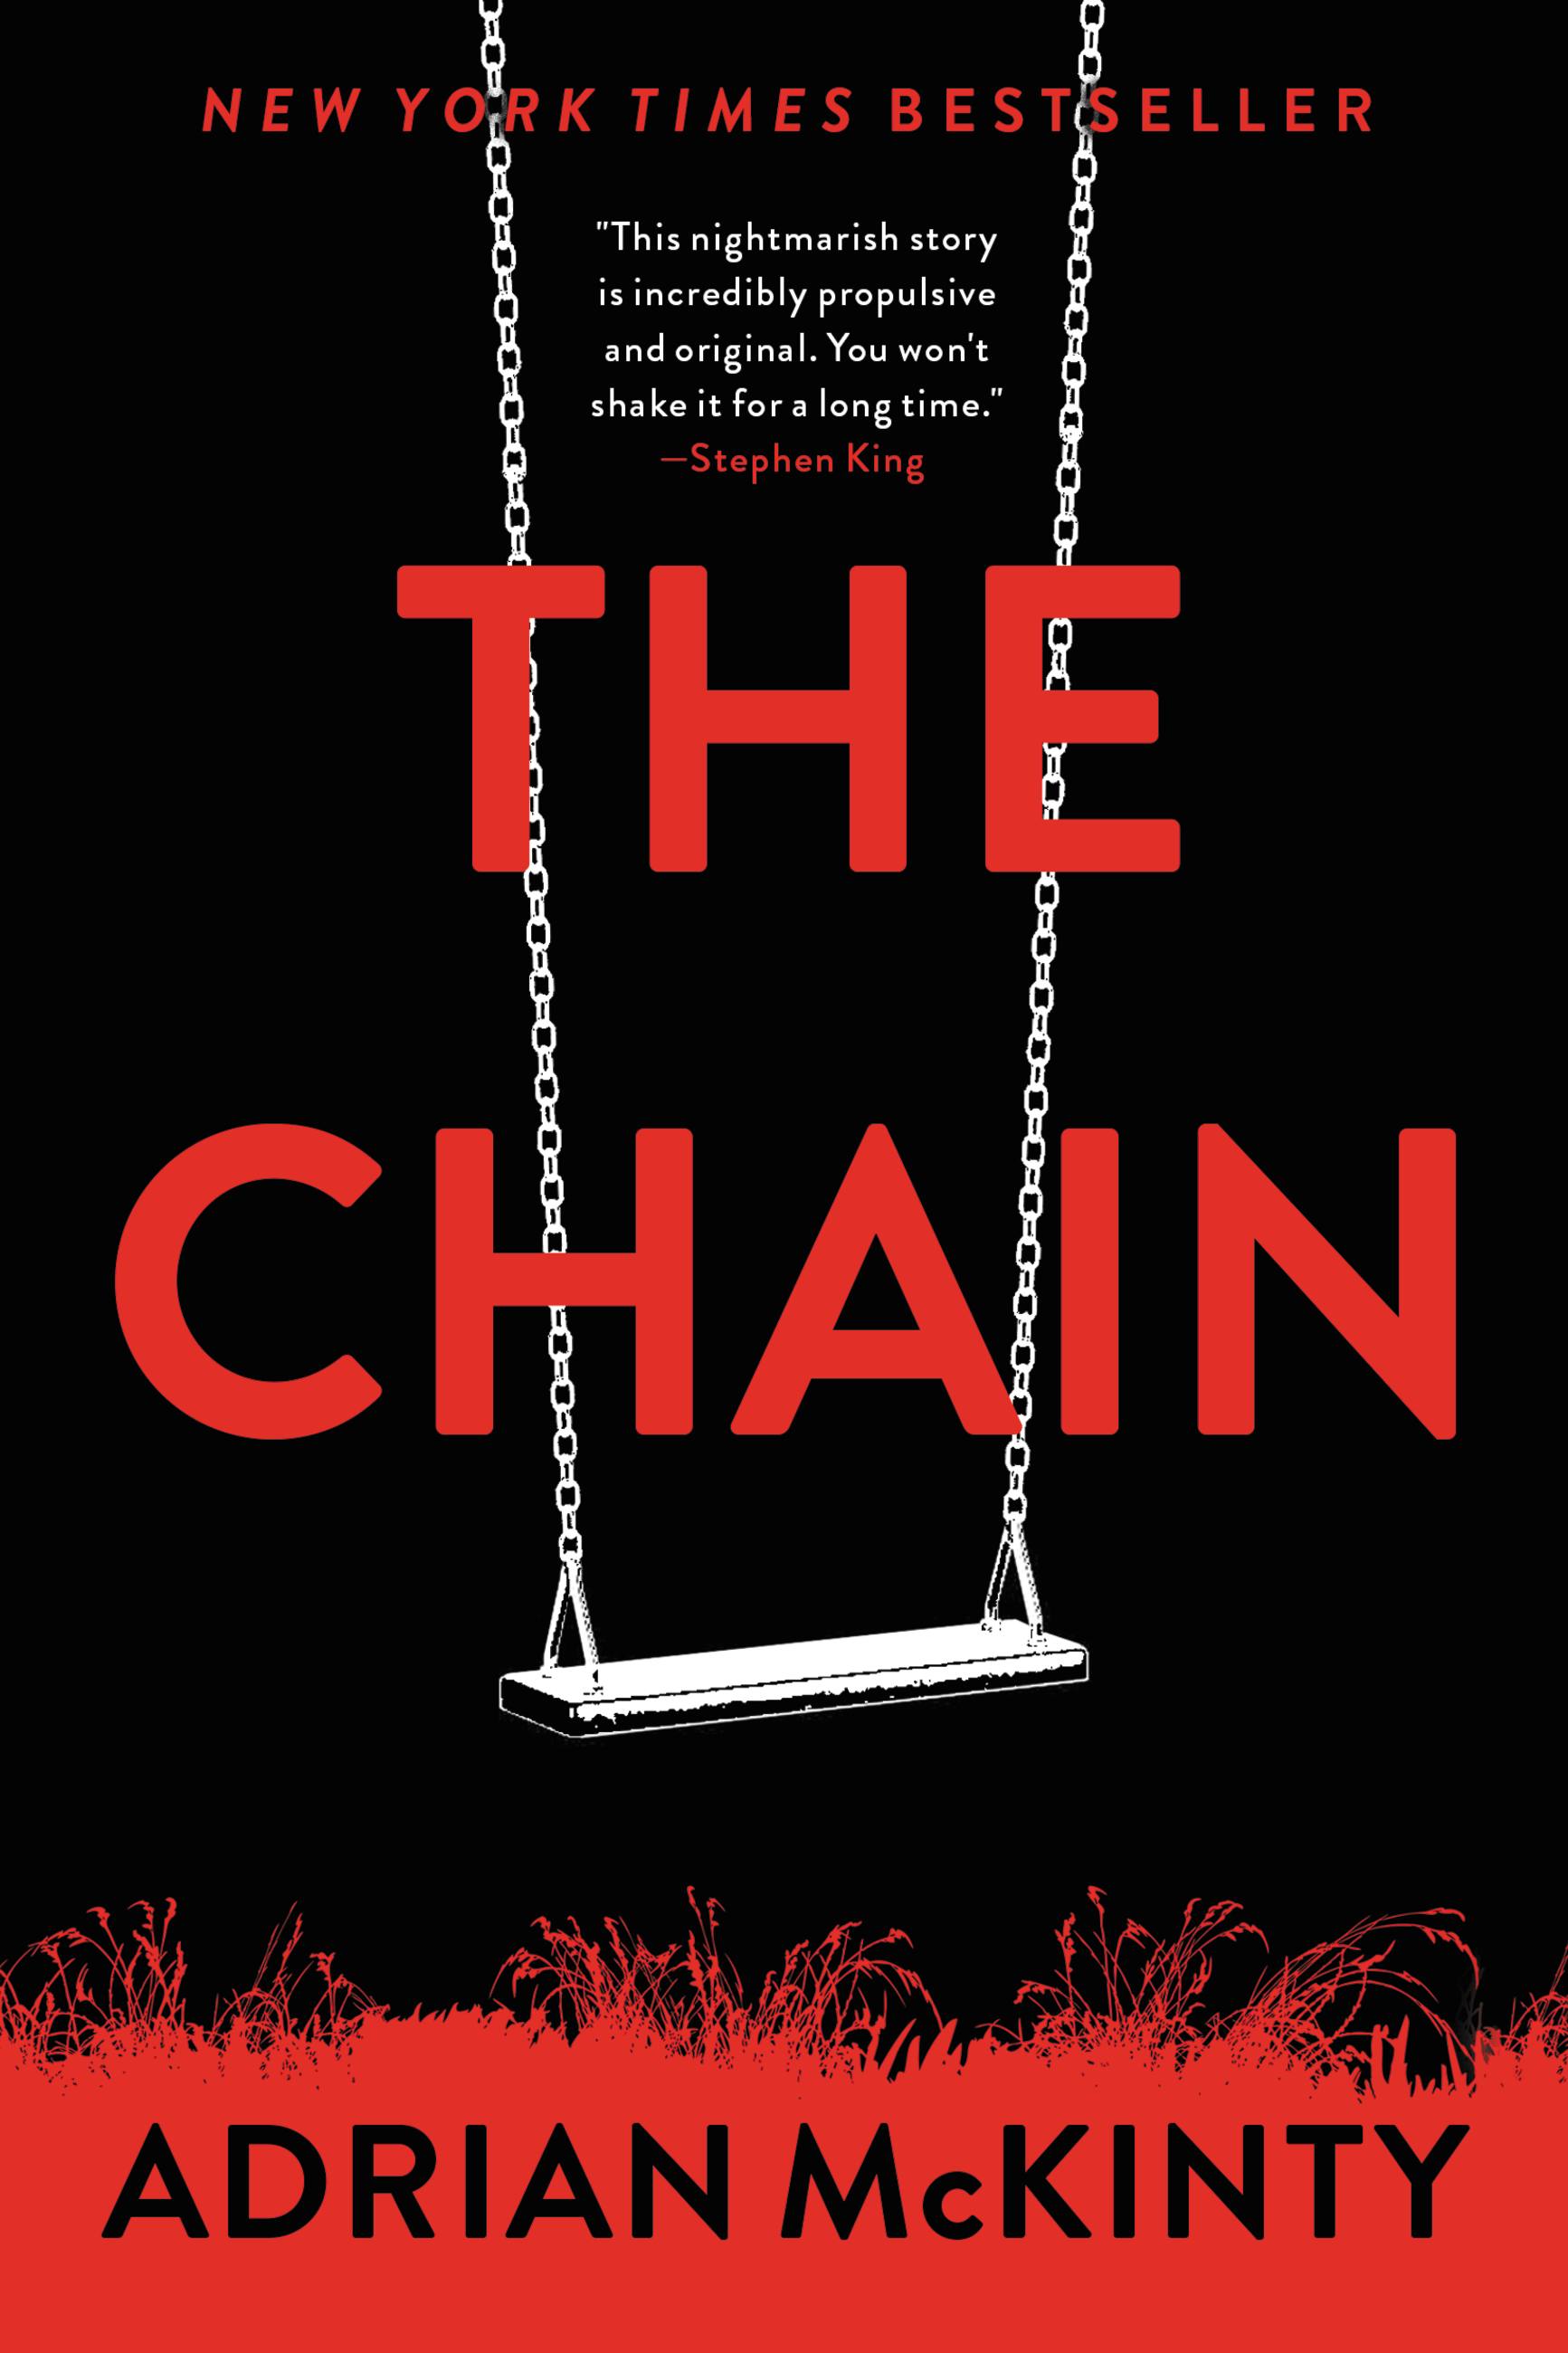 Chain, Chain, Chain - The New York Times